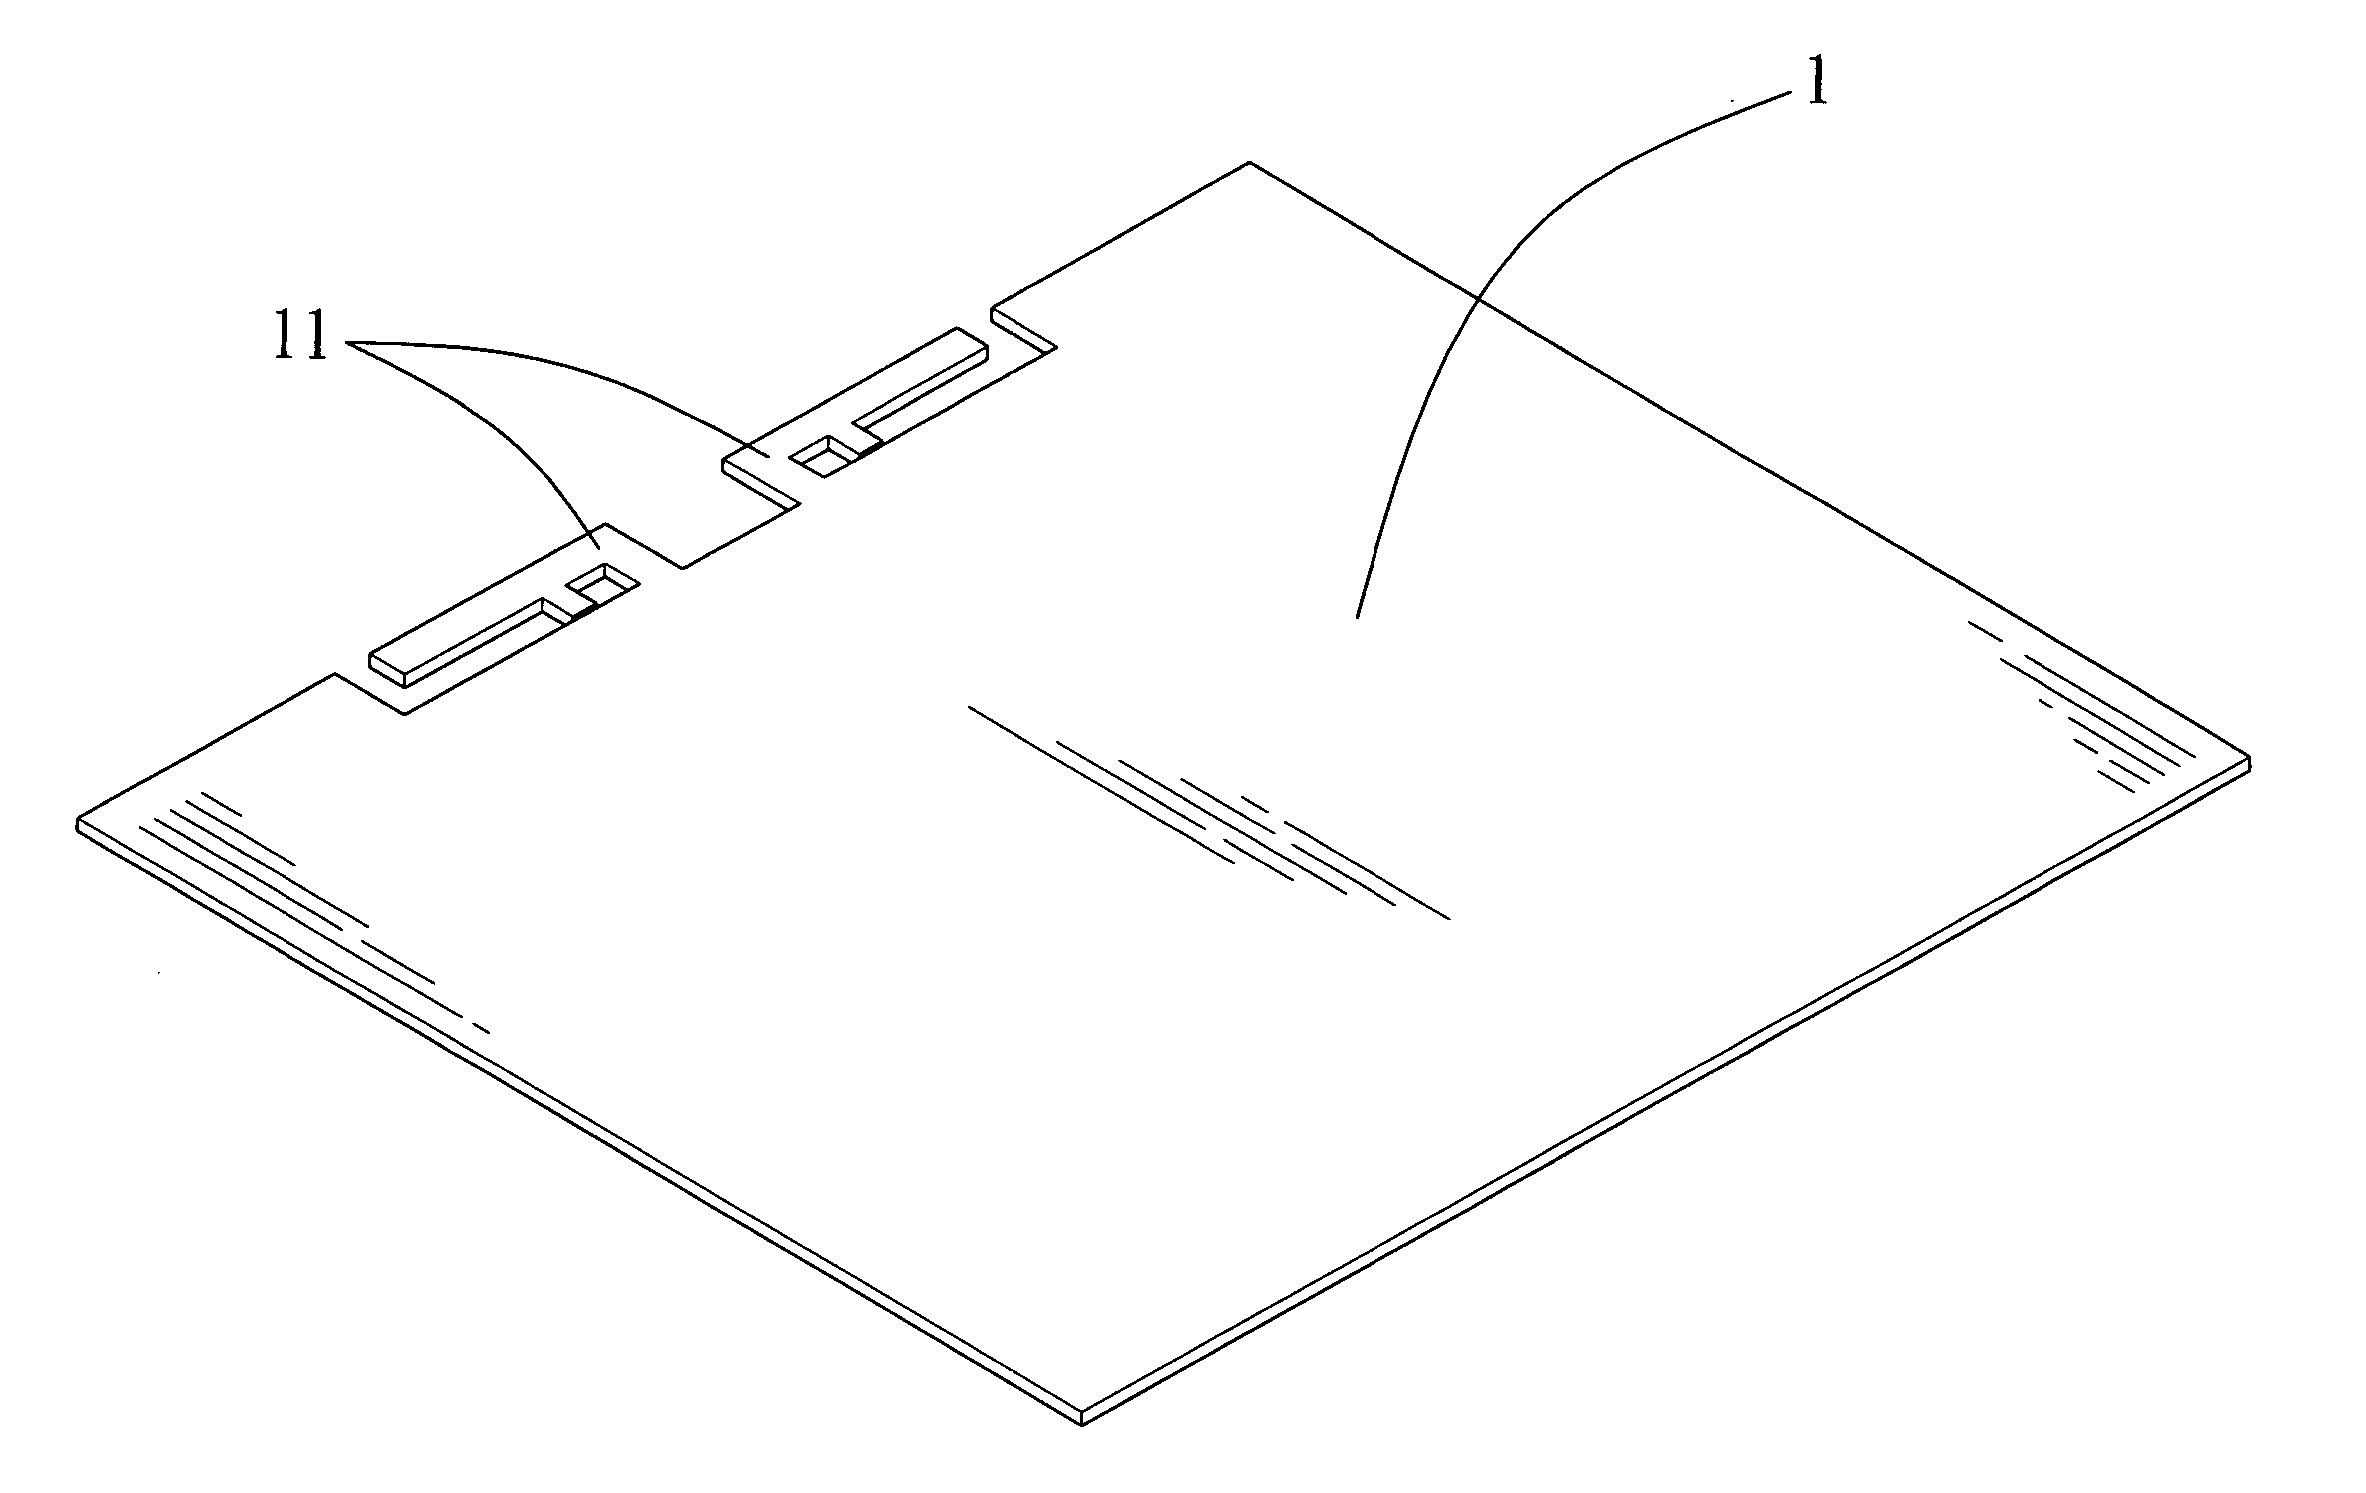 Planar inverted F antenna